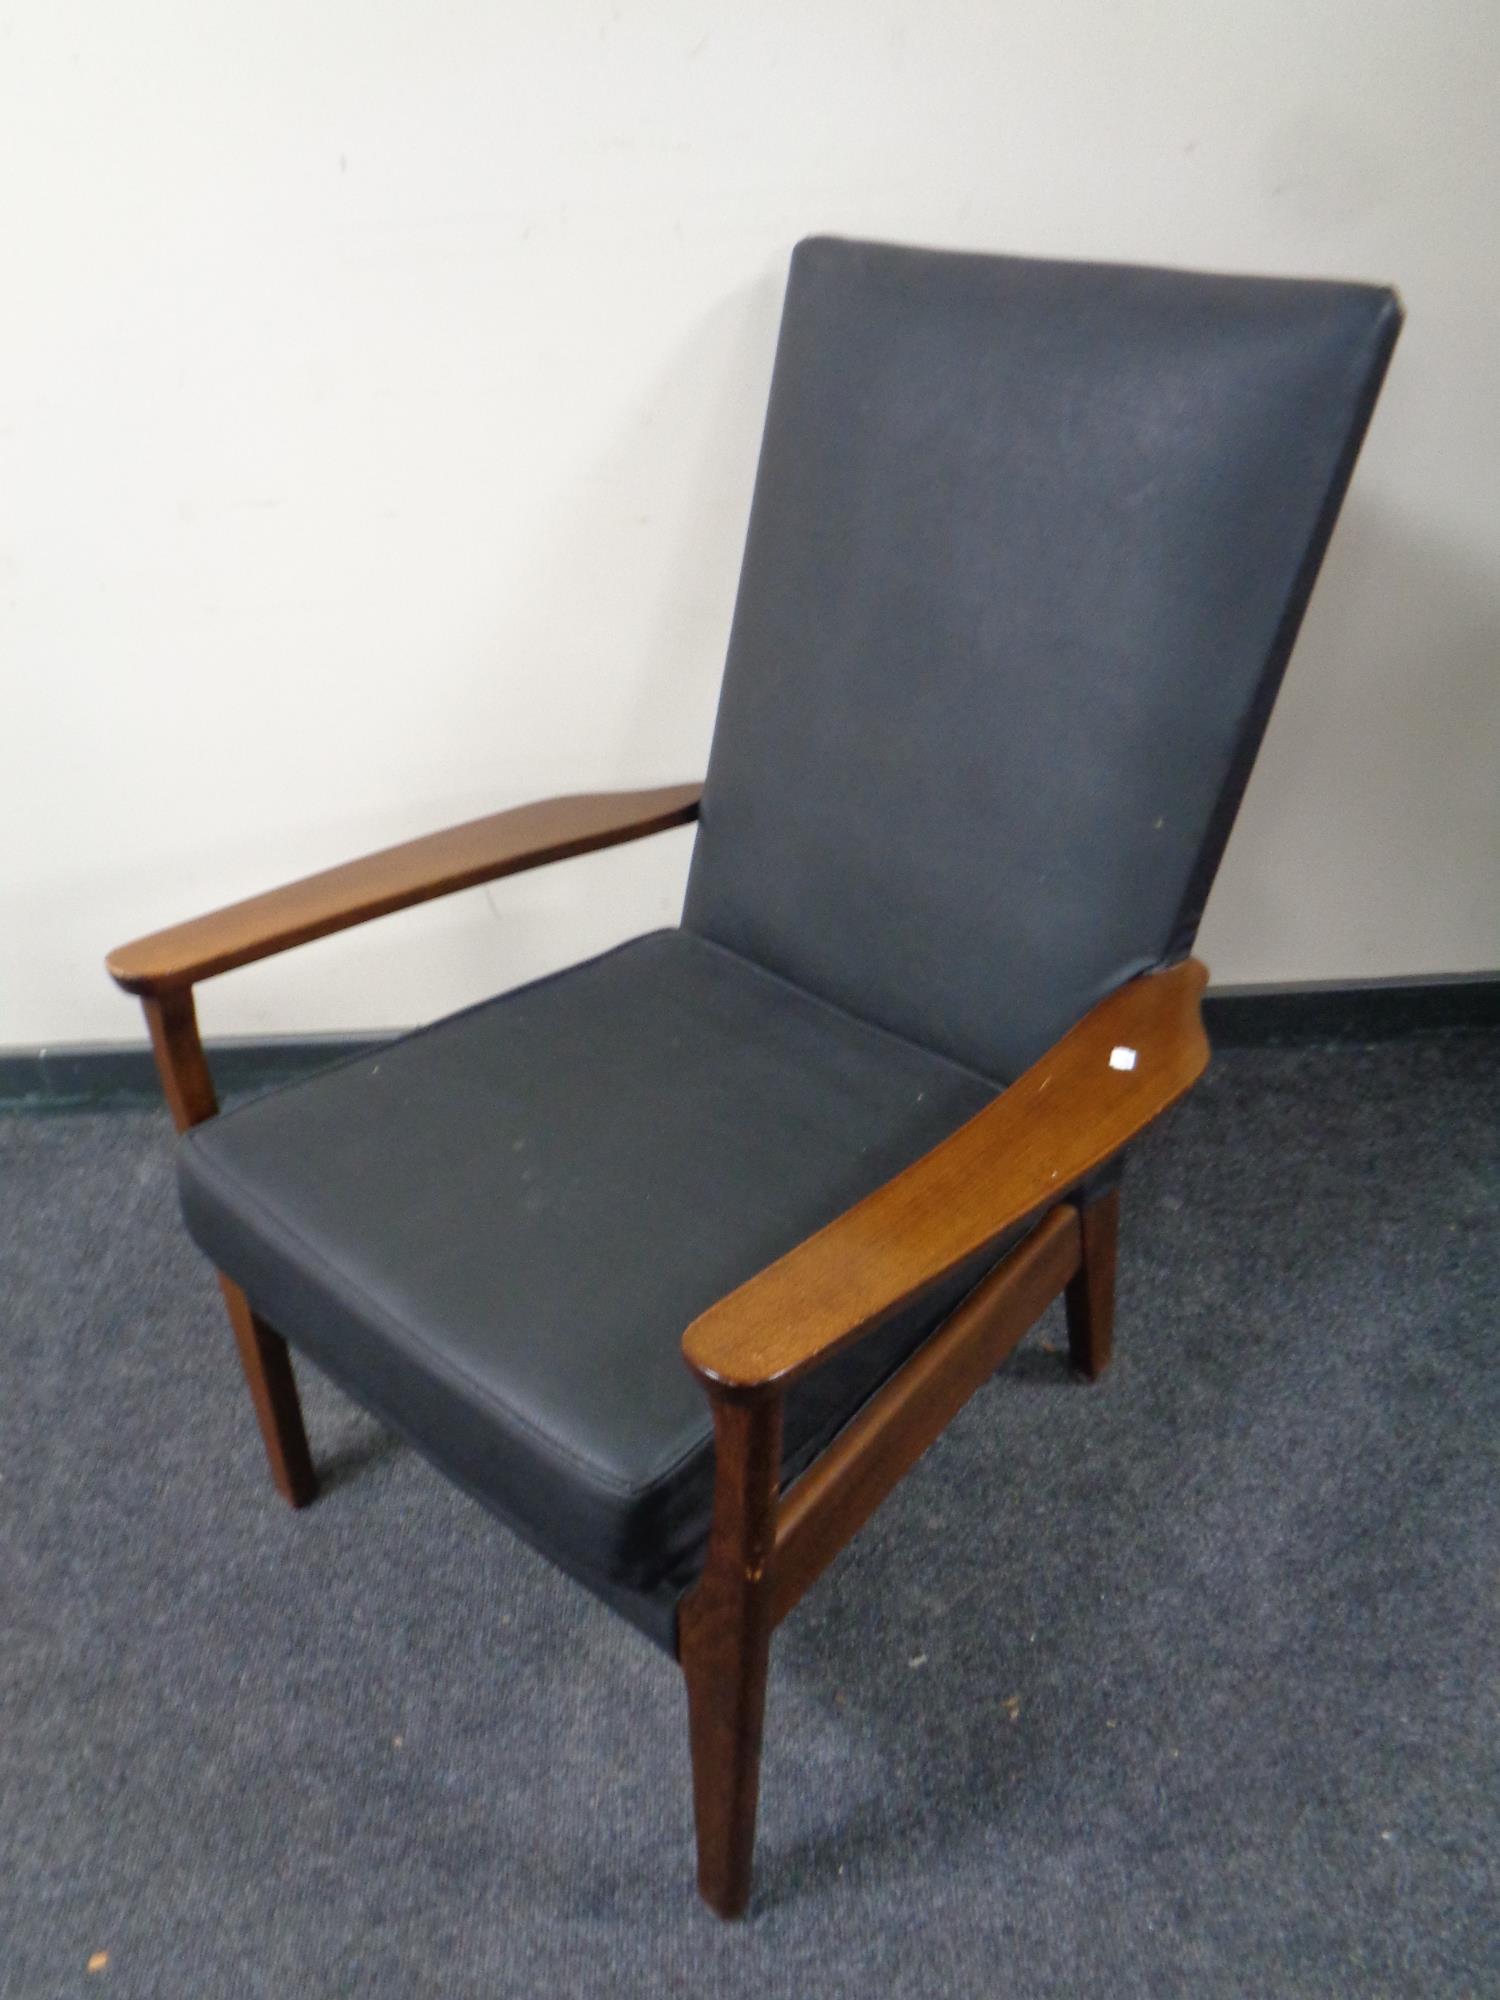 A mid 20th century teak armchair upholstered in black vinyl